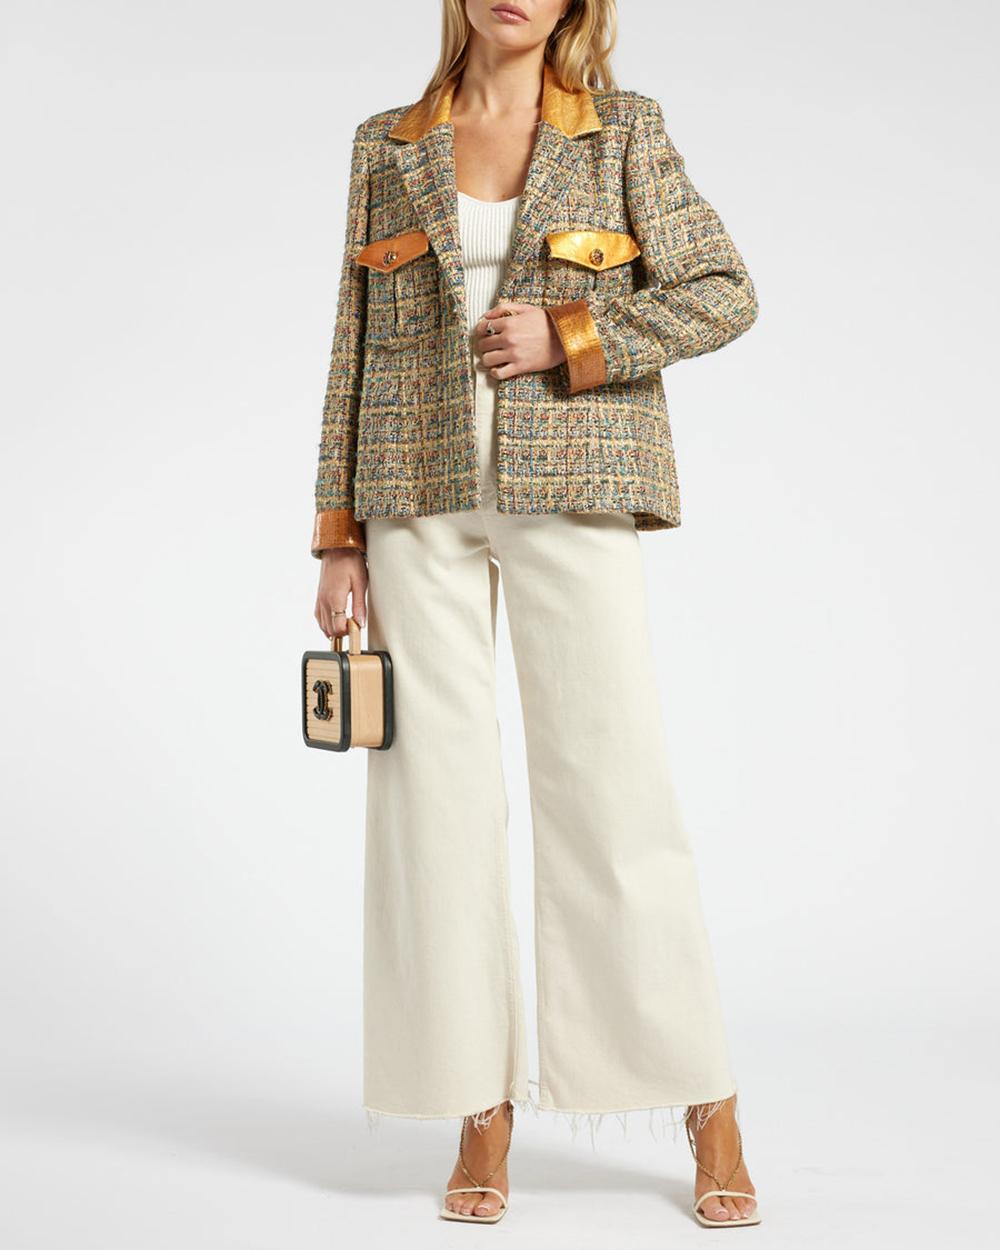 Chanel Kristem Stewart Style Paris / Egypt Tweed Jacket  For Sale 4